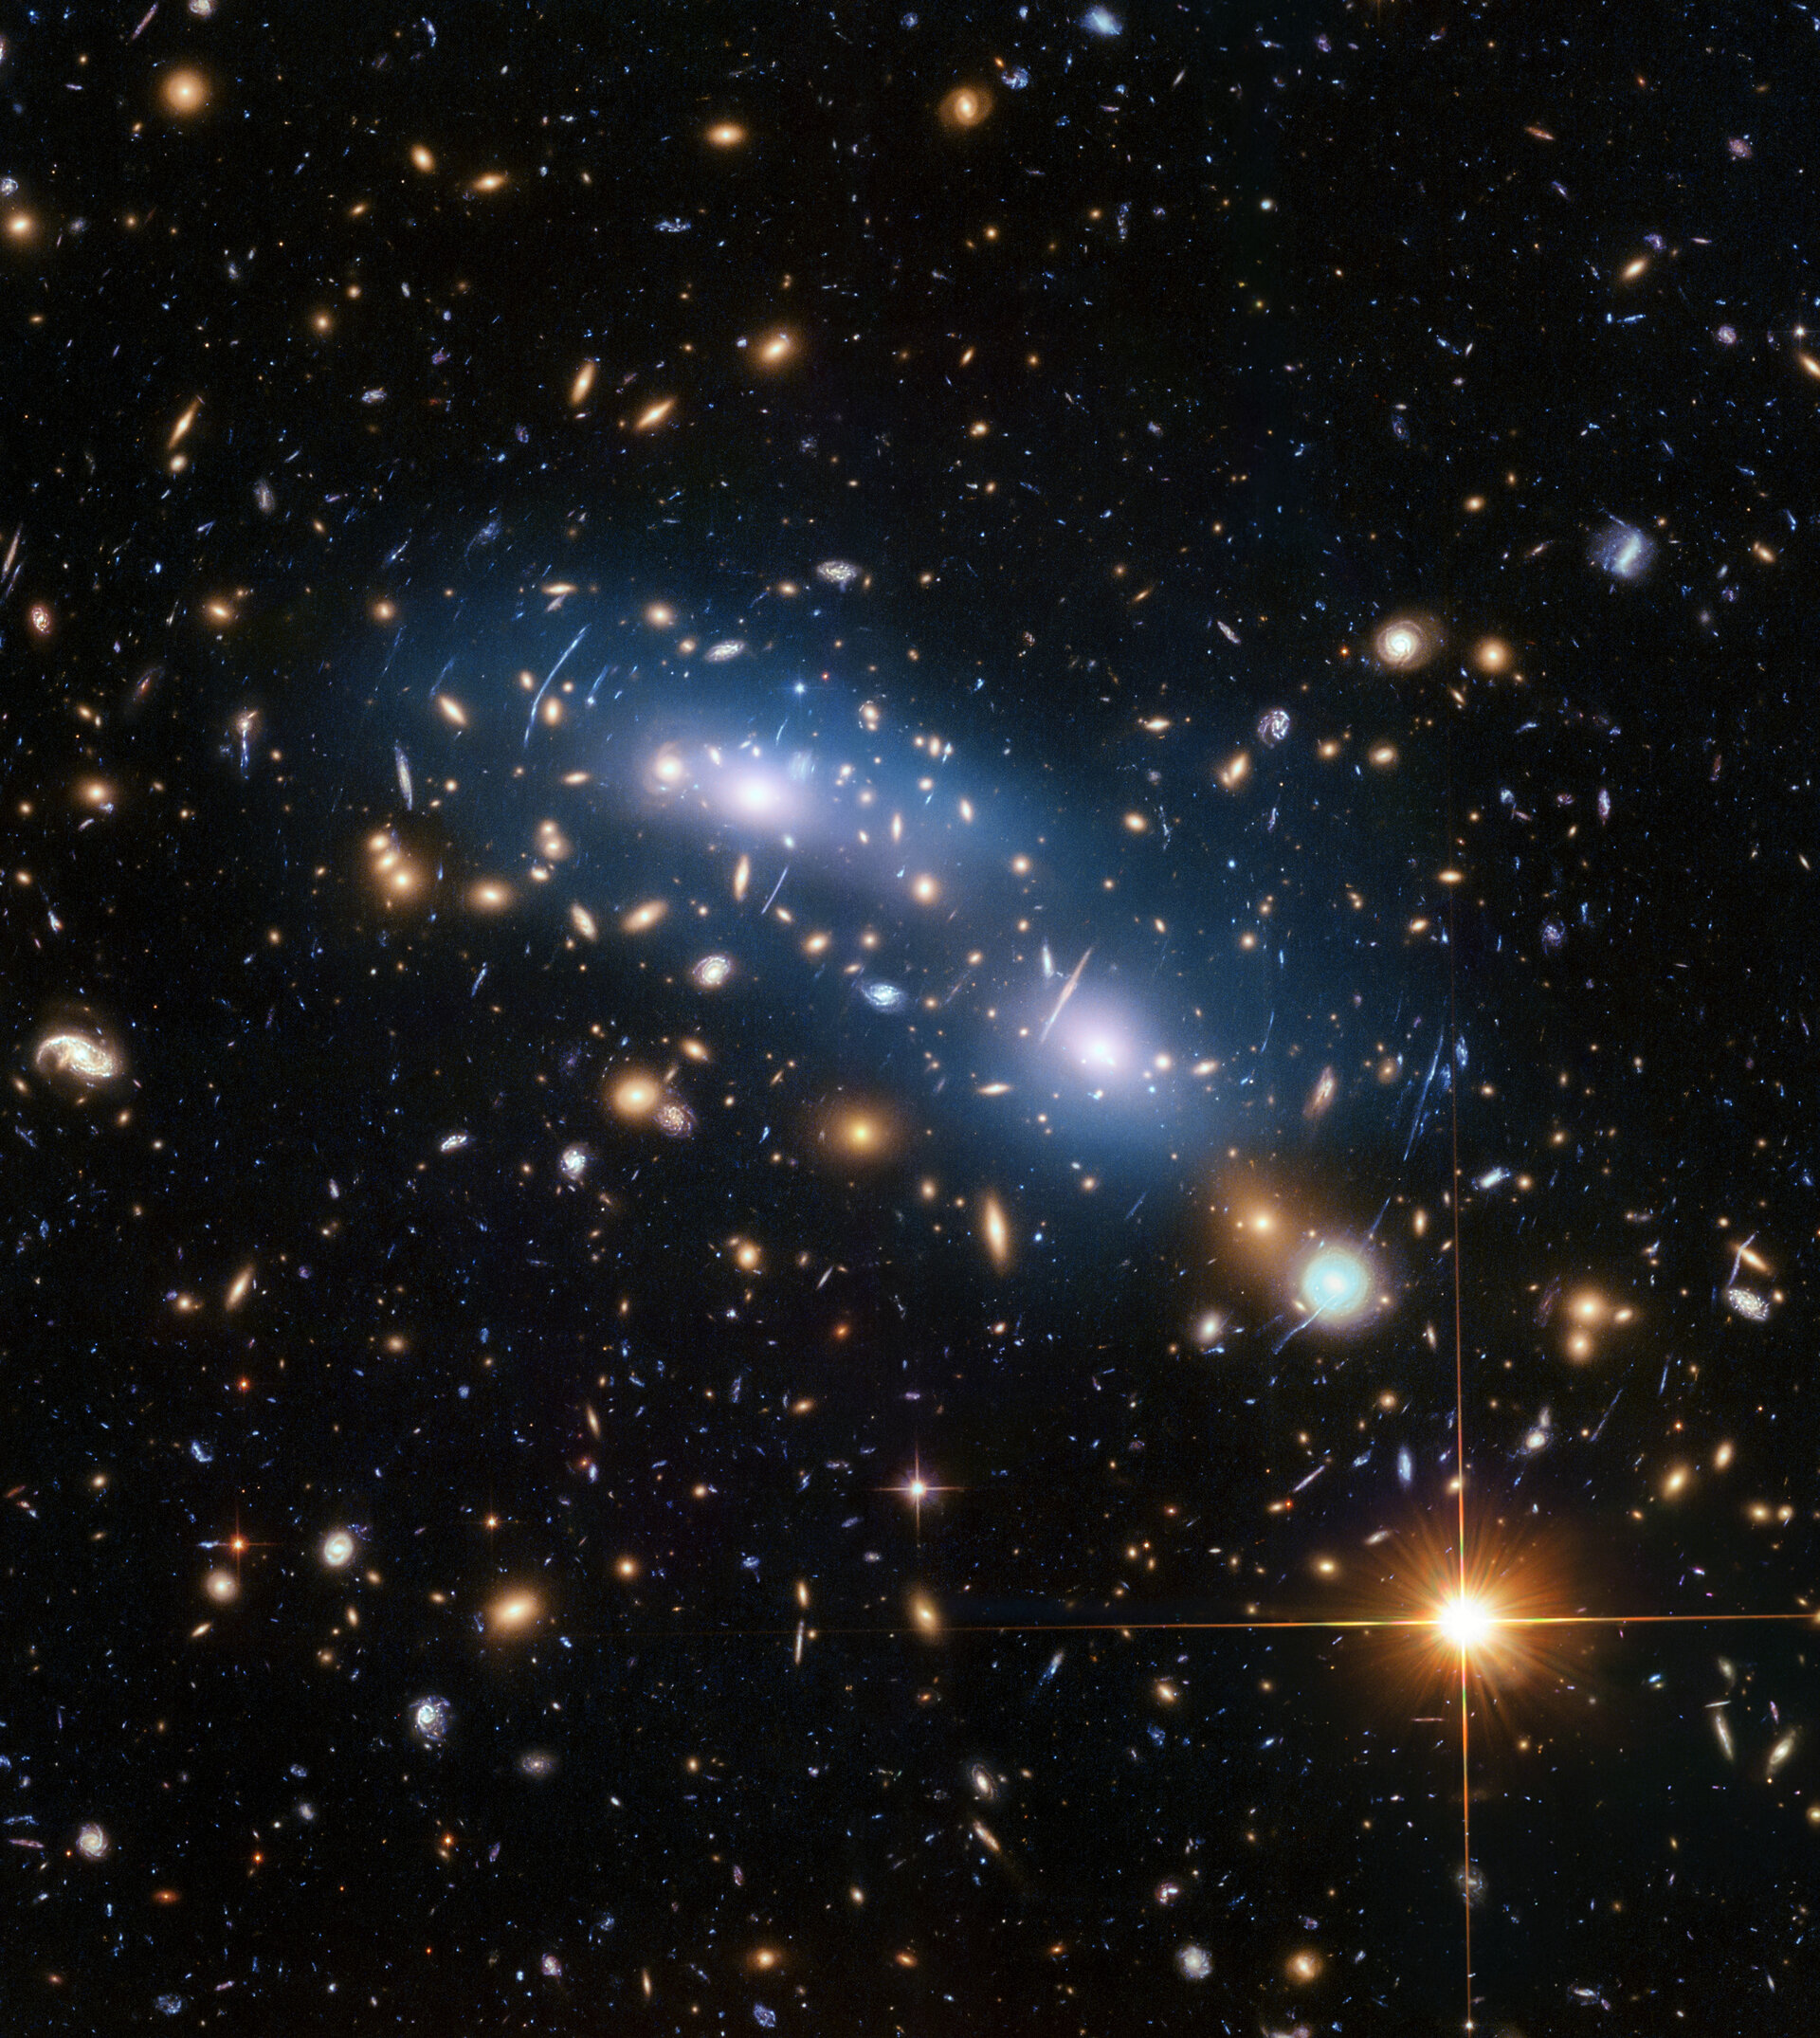 Intracluster light in galaxy cluster MACSJ0416